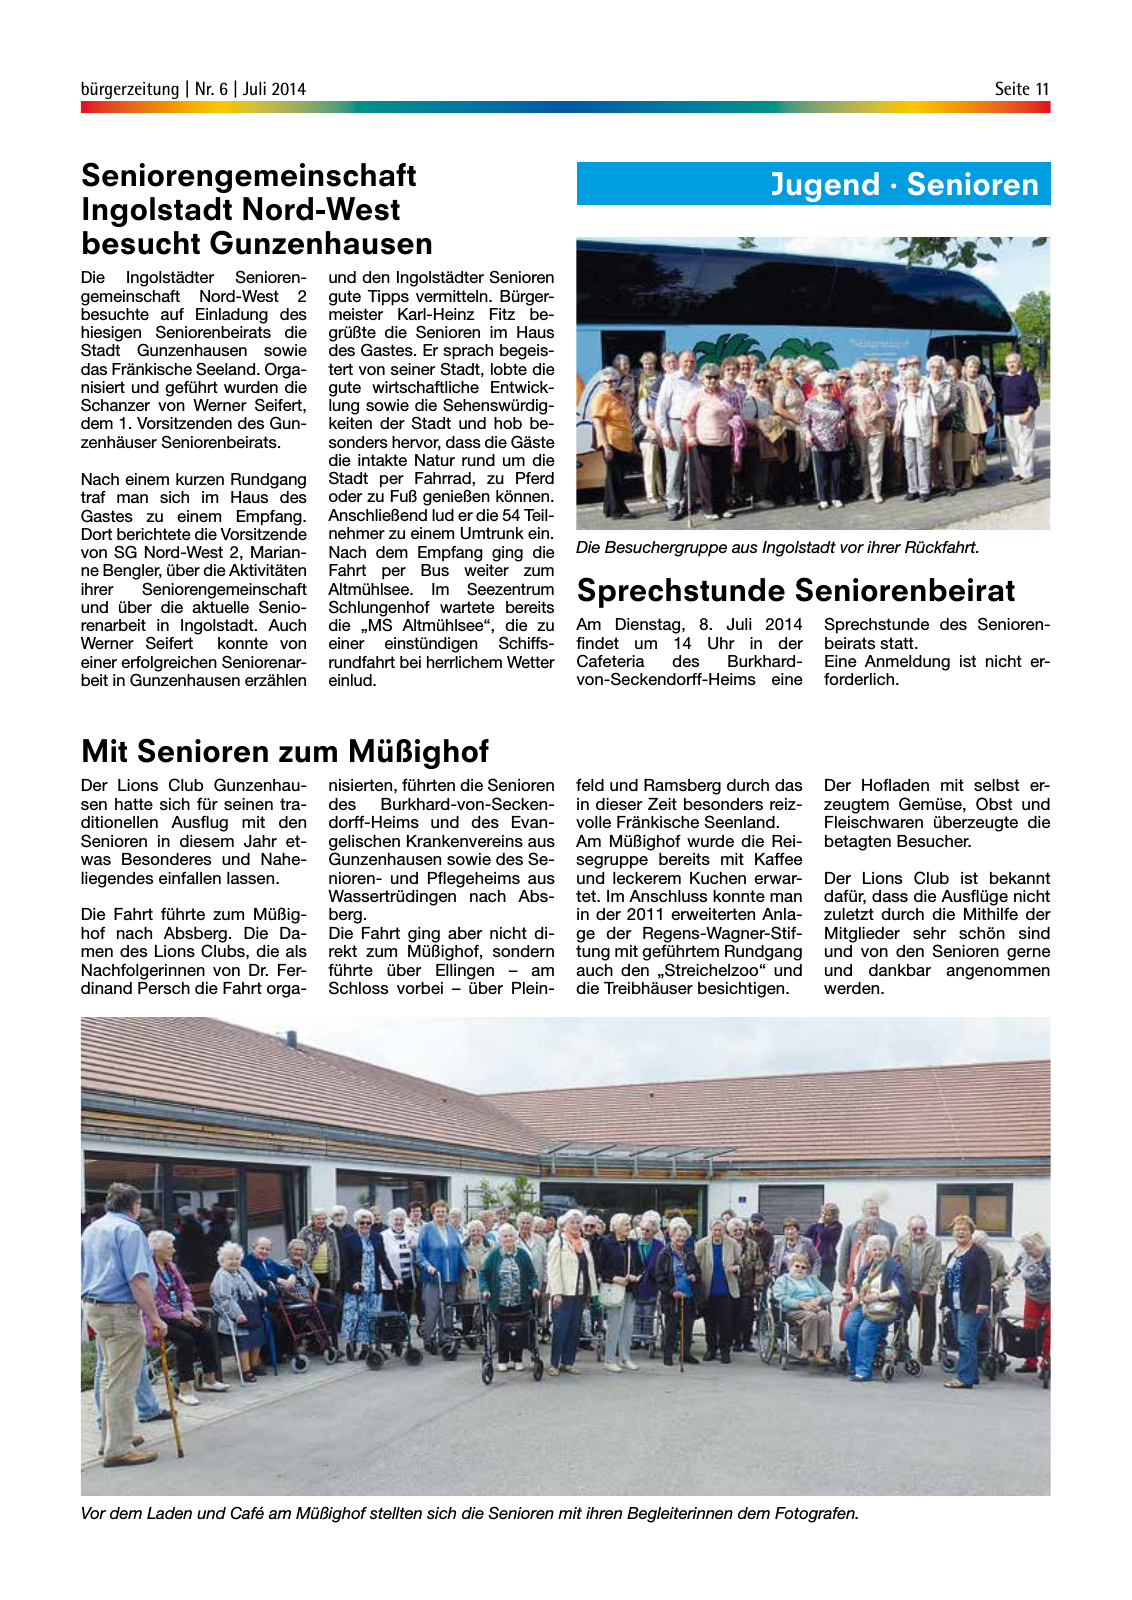 Vorschau StadtLandGUN Gunzenhäuser Bürgerzeitung Nr. 6 | Juli 2014 Seite 11